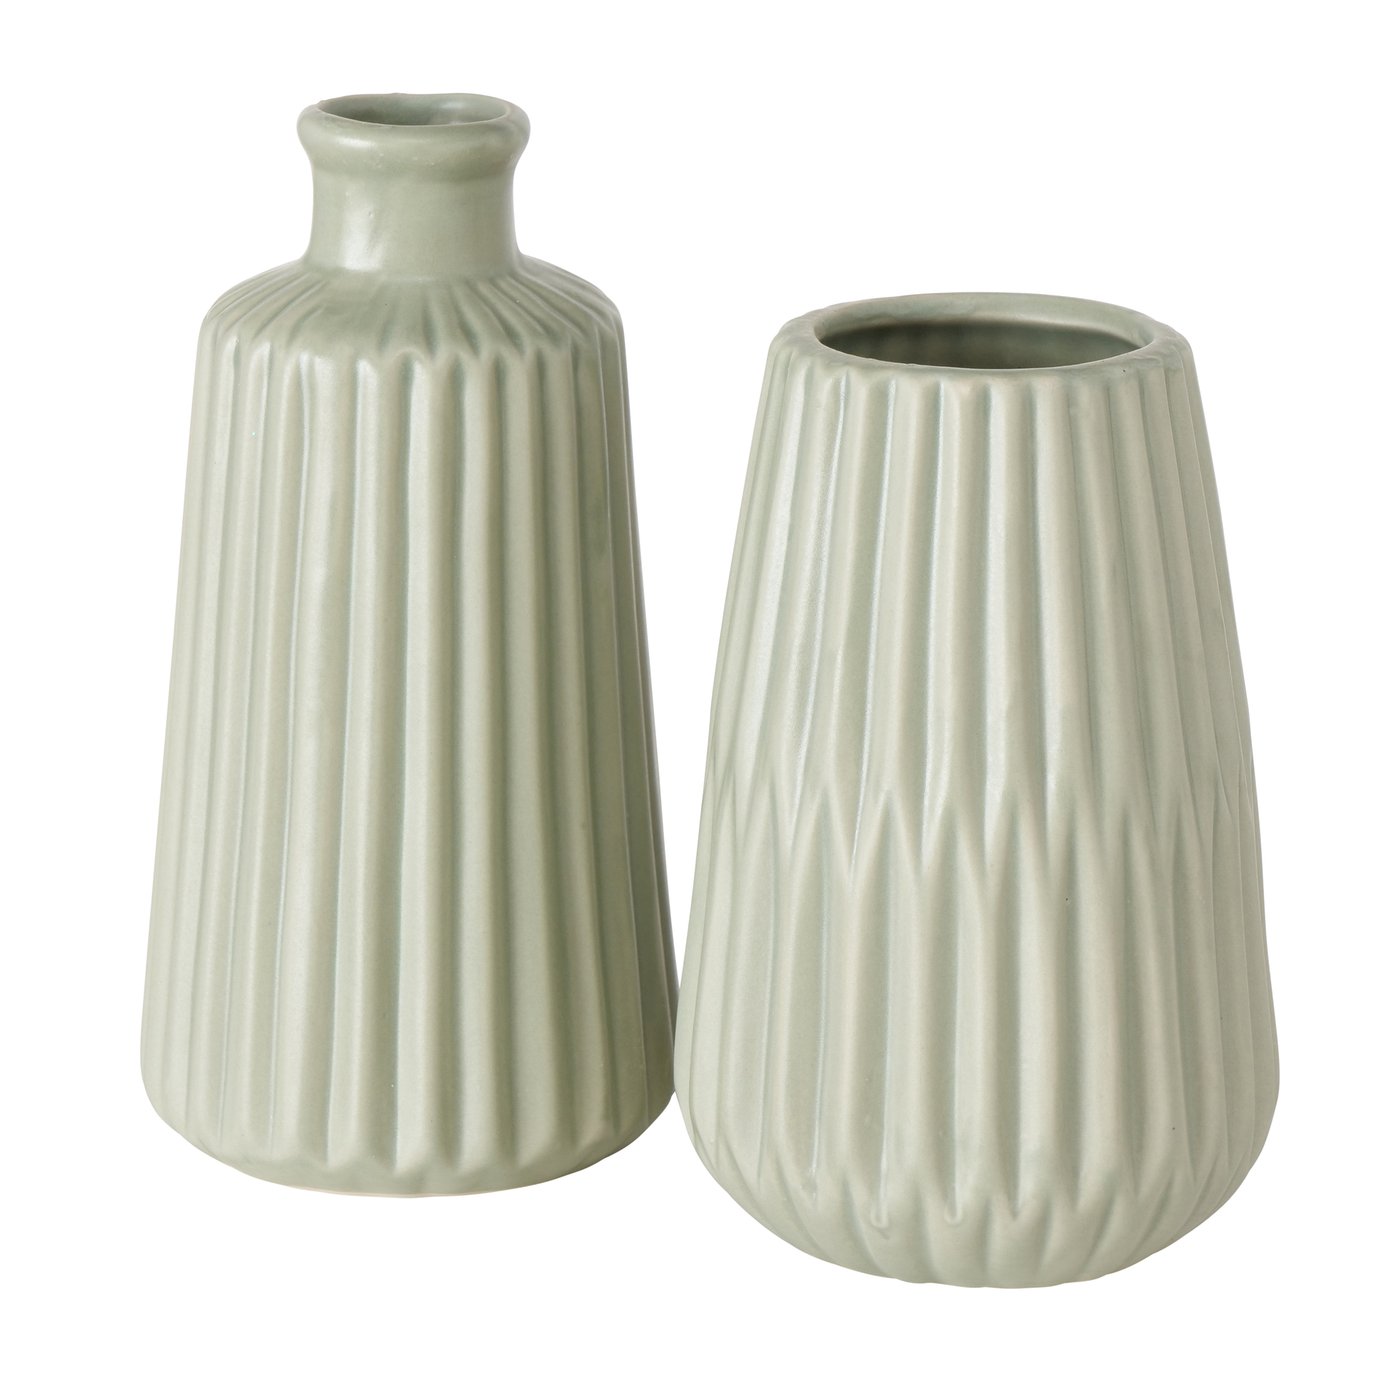 ESKO Vasen-Set, 2-tlg. hellgrün | Markt Textil Event Vasen 